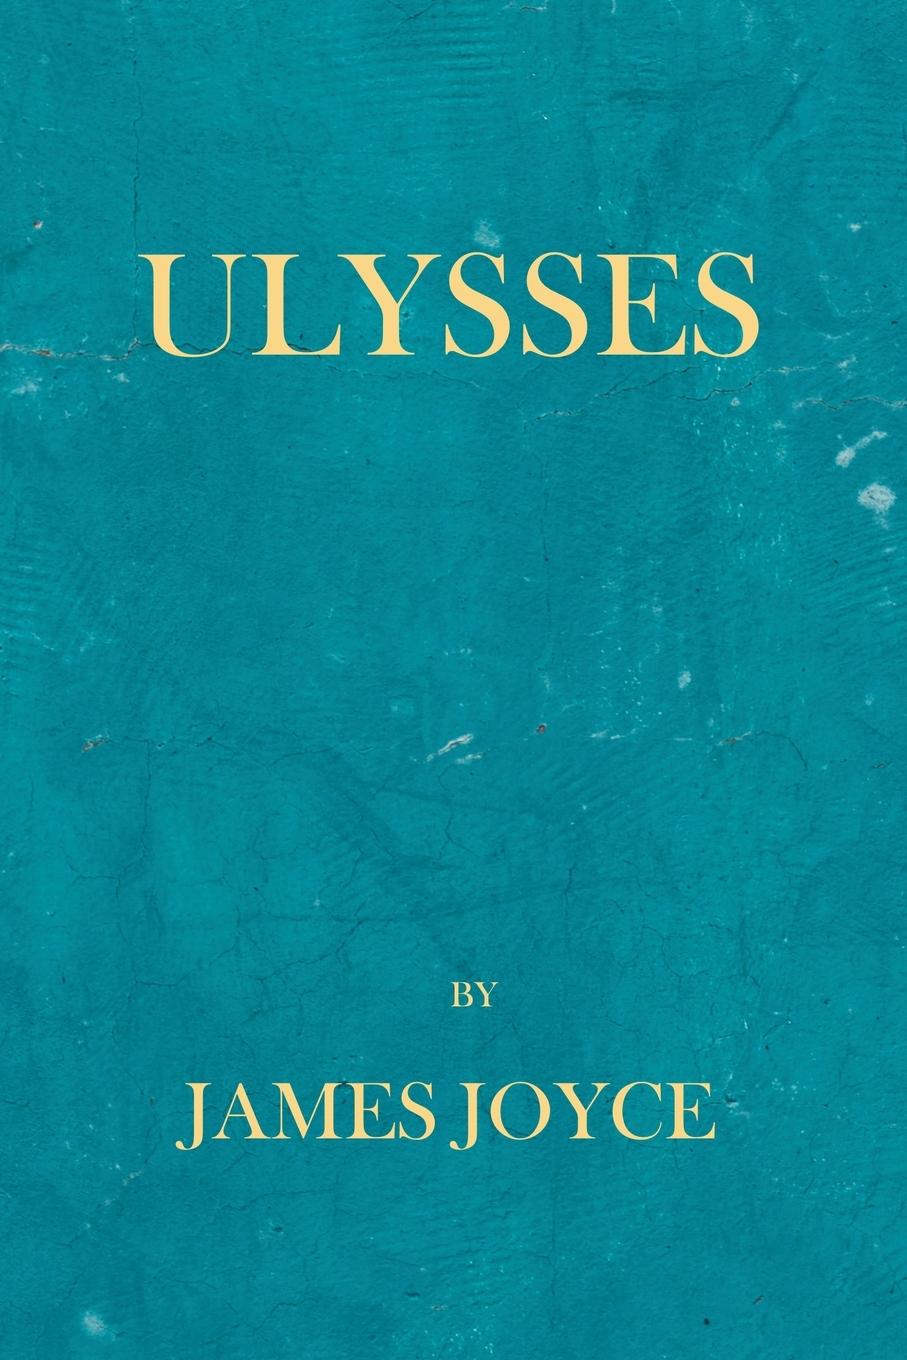 Carte Ulysses 